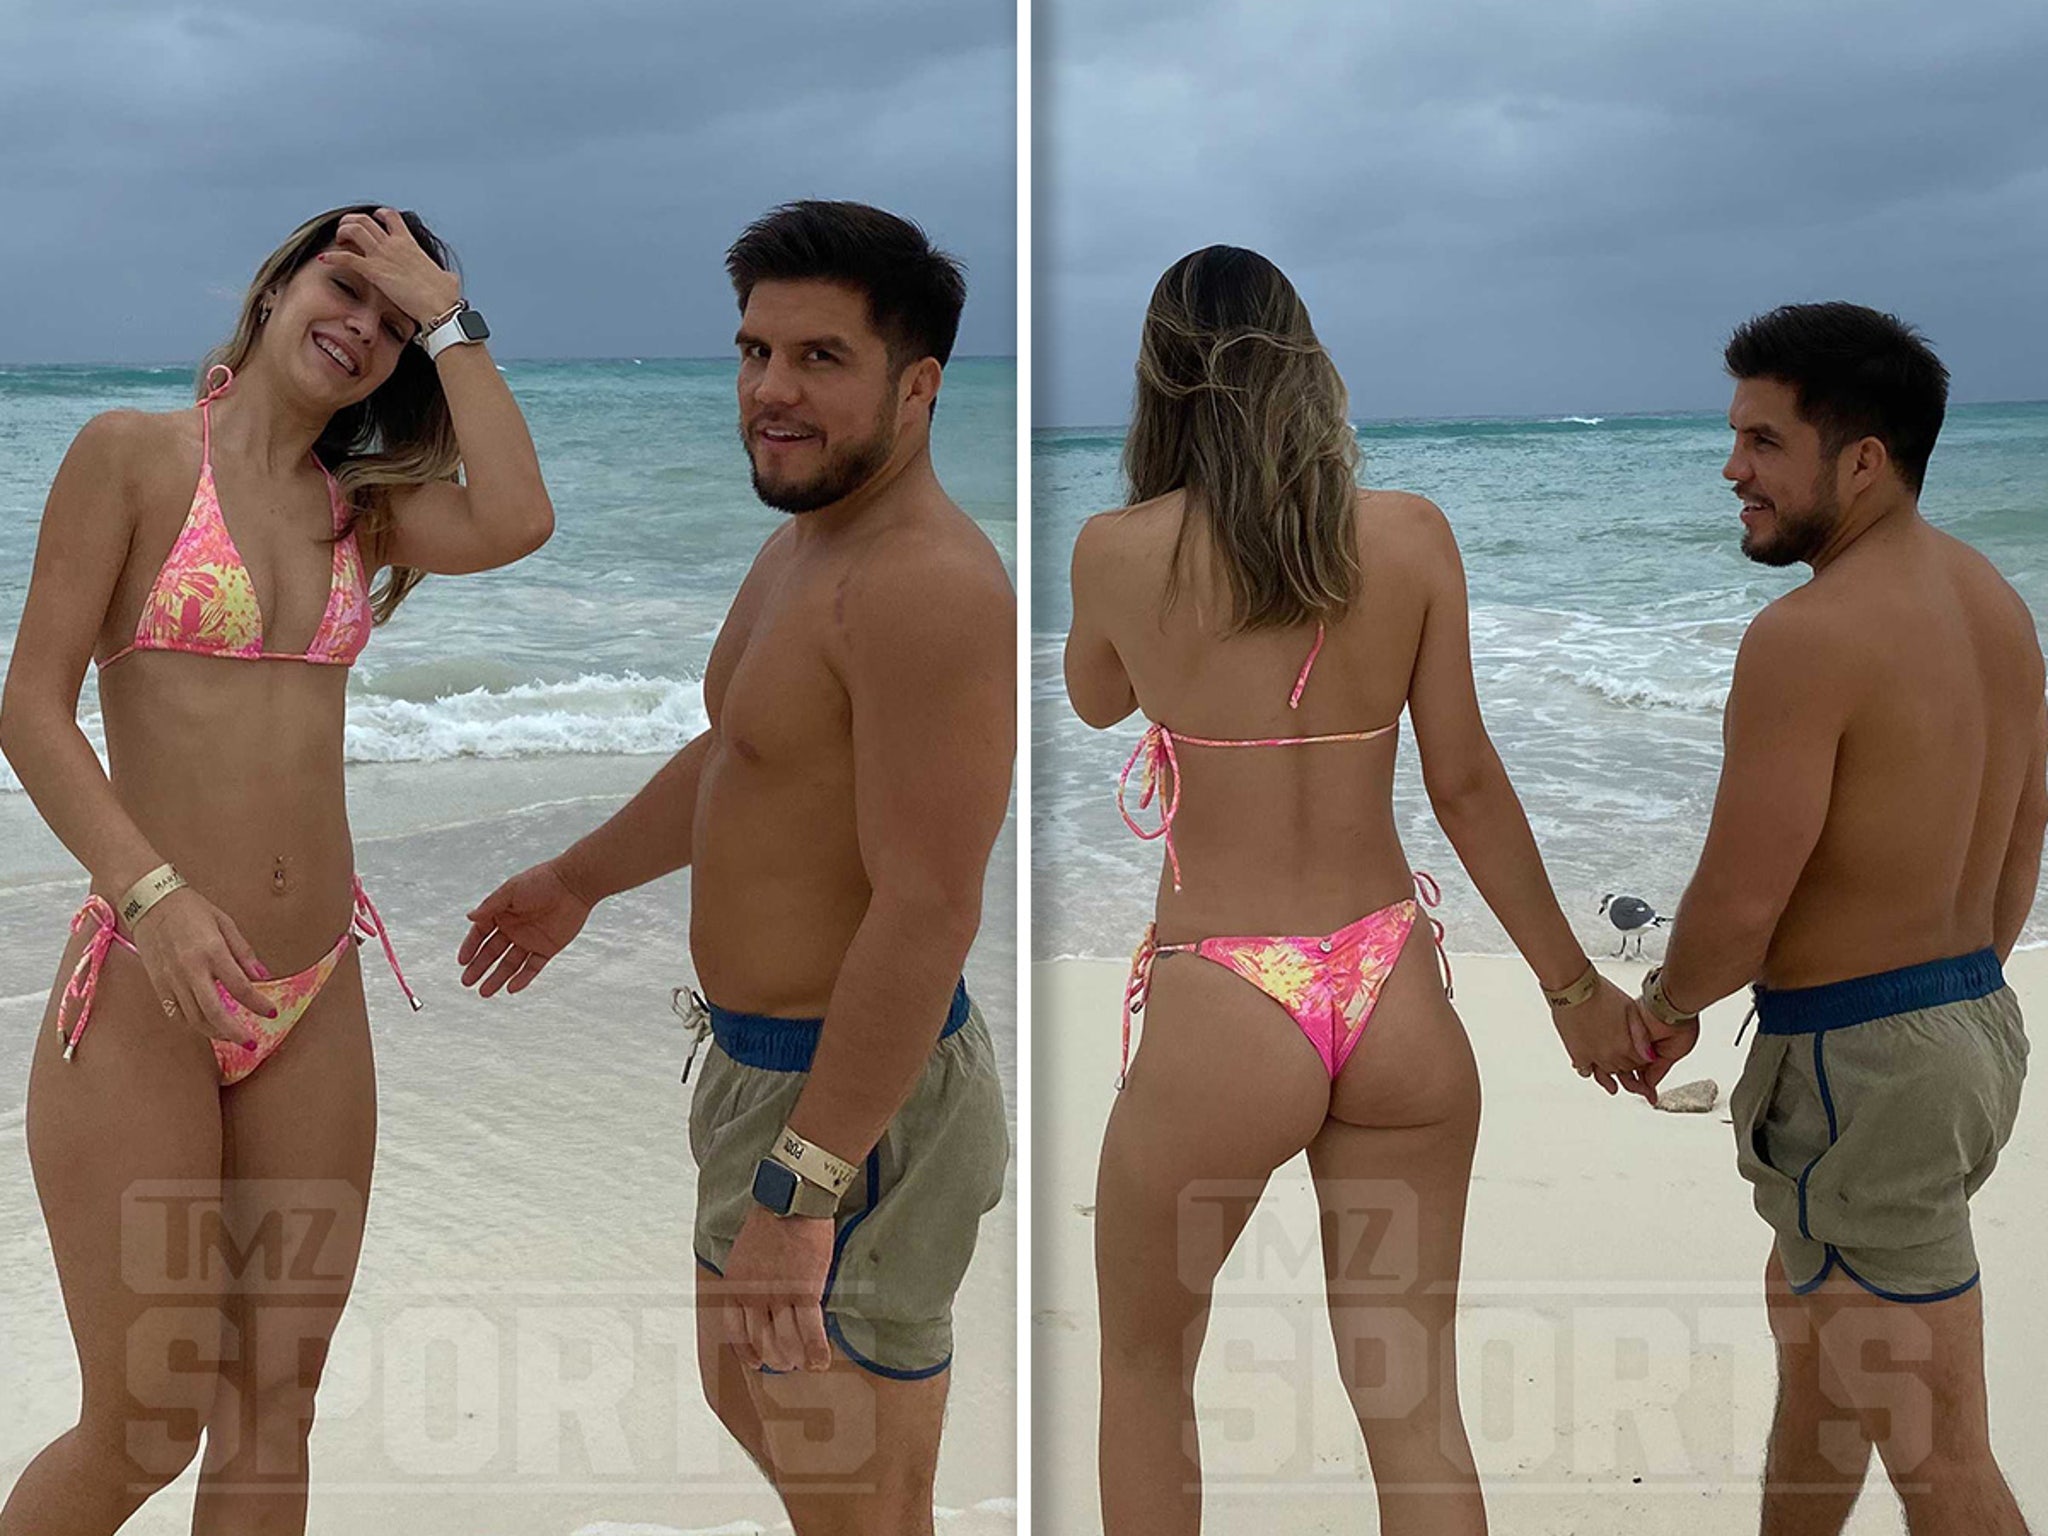 UFCs Henry Cejudo Hits the Beach with Smokin Hot New Lady, Brazilian Model! photo